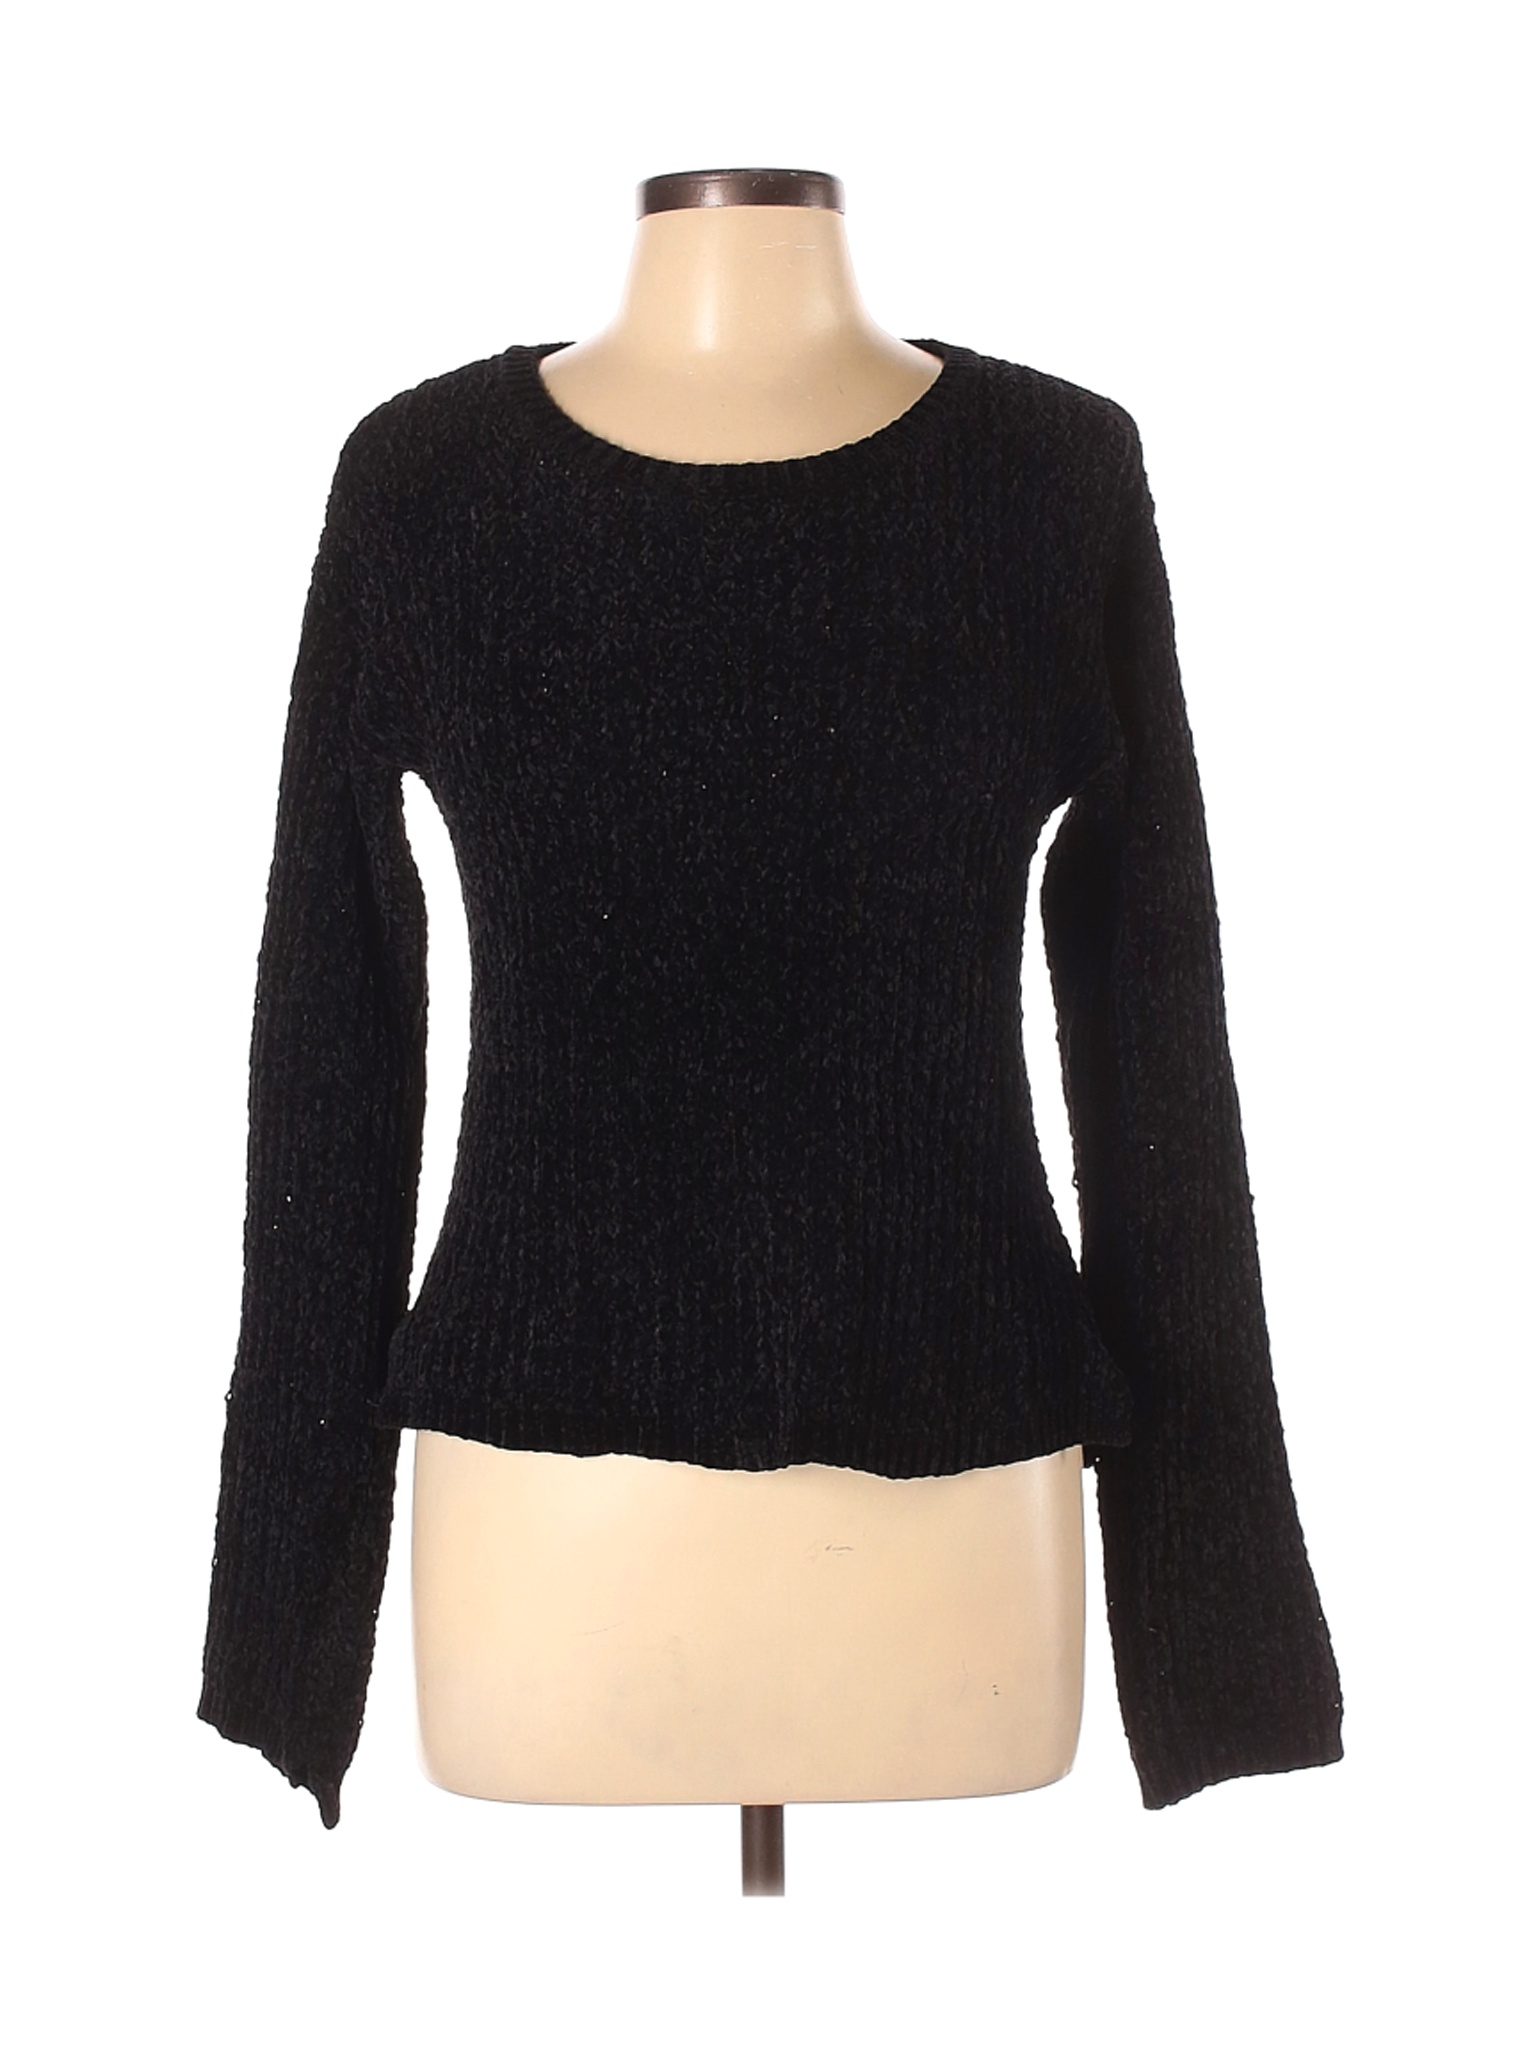 Aeropostale Women Black Pullover Sweater L | eBay